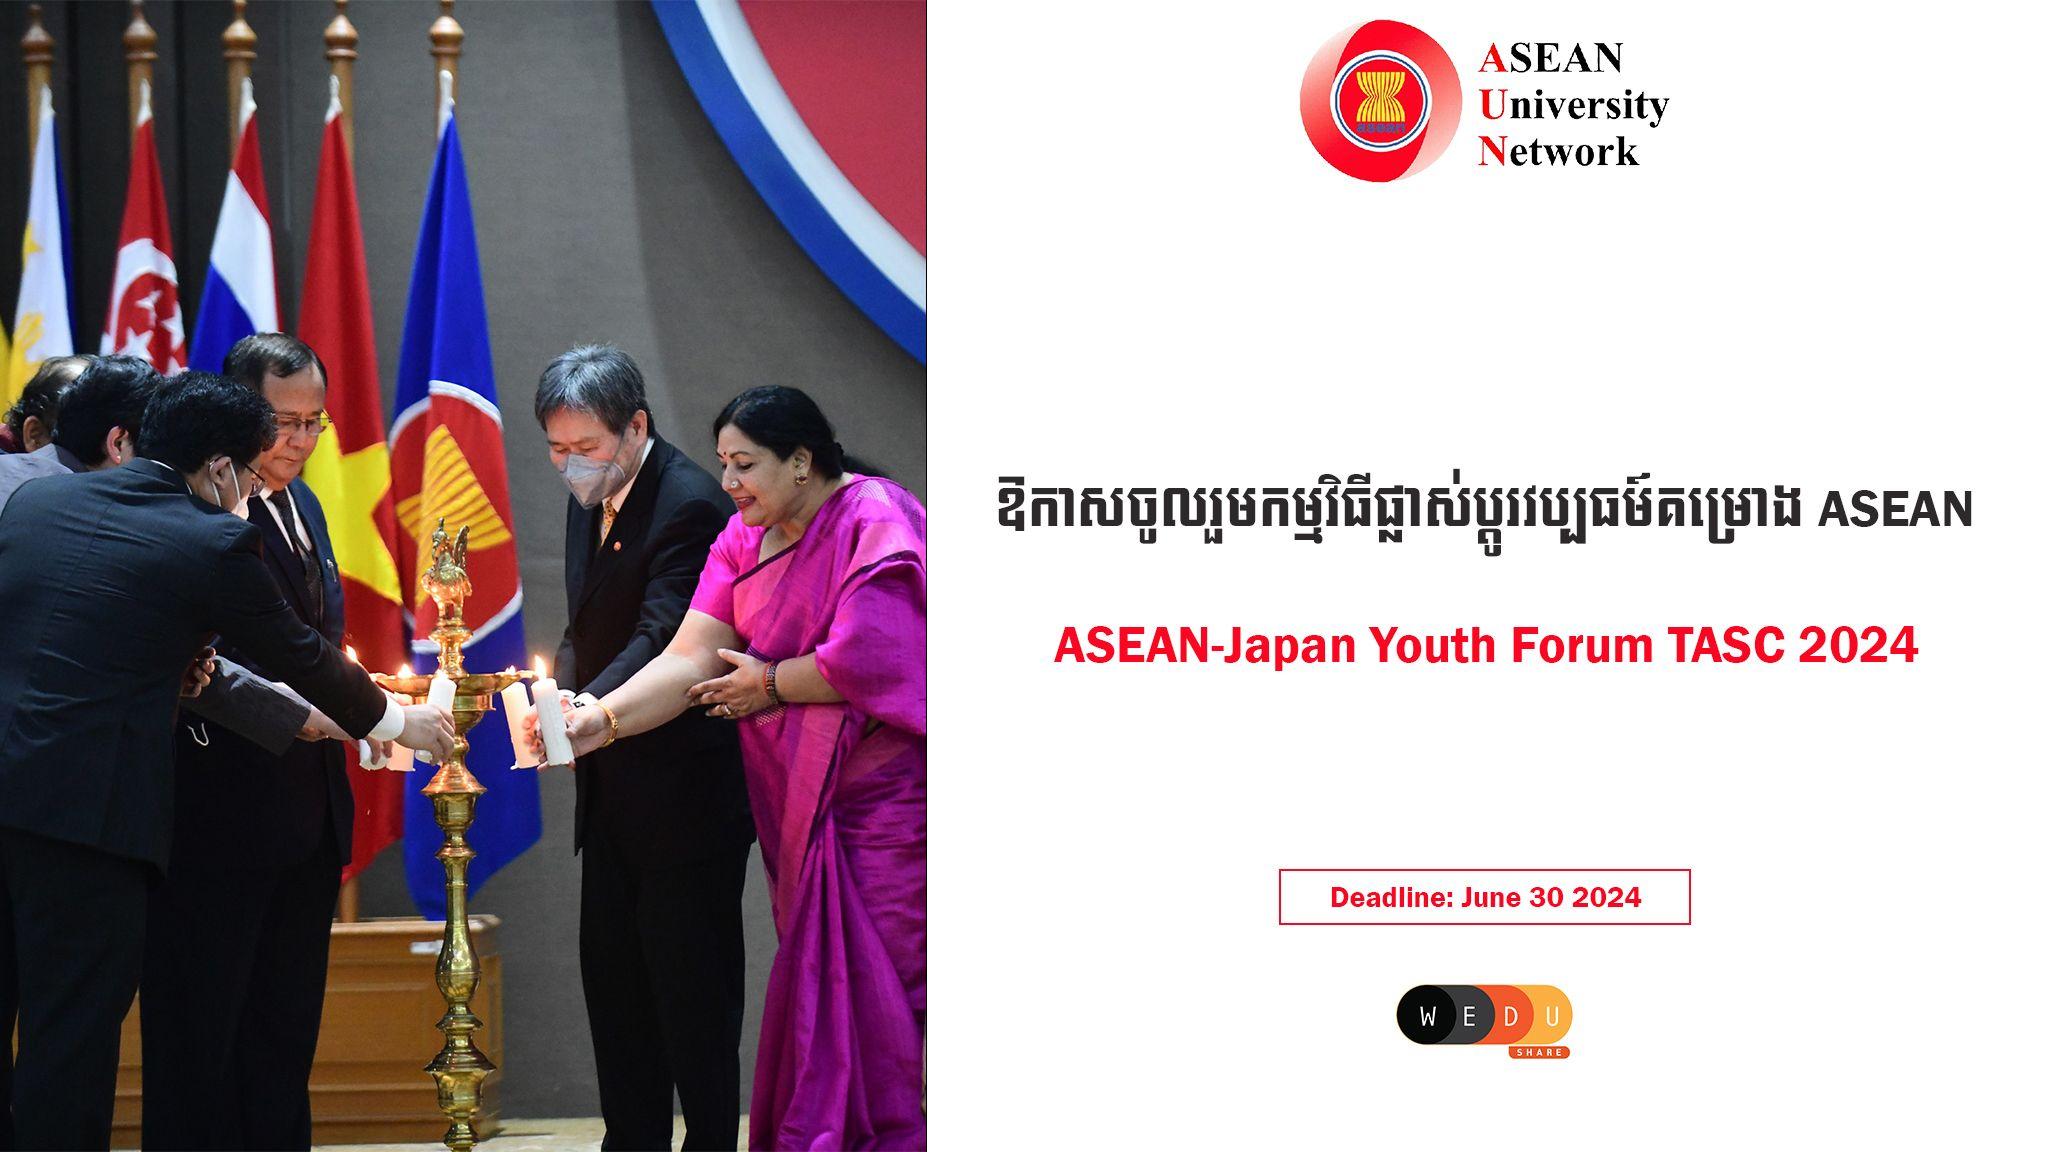 ASEAN-Japan Youth TASC 2024 Forum